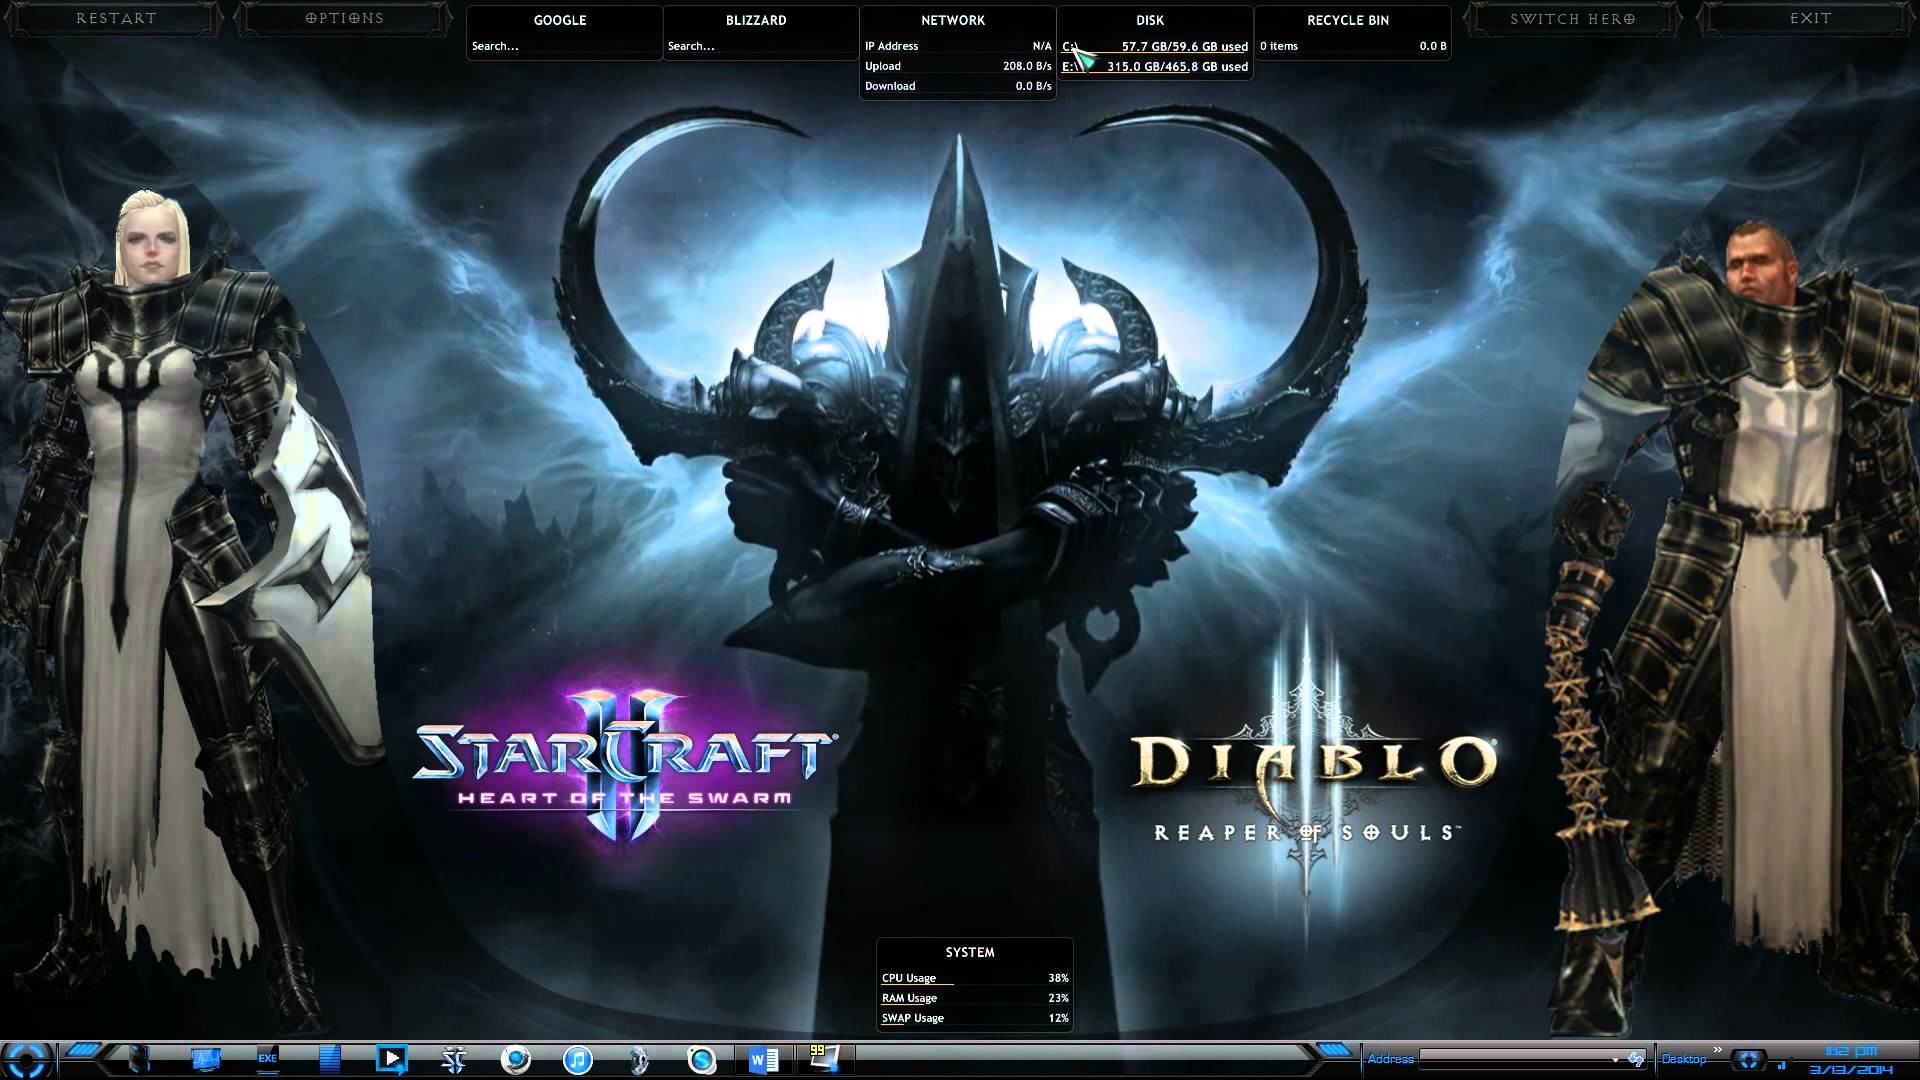 1920x1080 Diablo 3 Reaper of Souls Desktop Theme Dreamscene, Rainmeter, Glass, HUD,  Animated Moving Background - YouTube